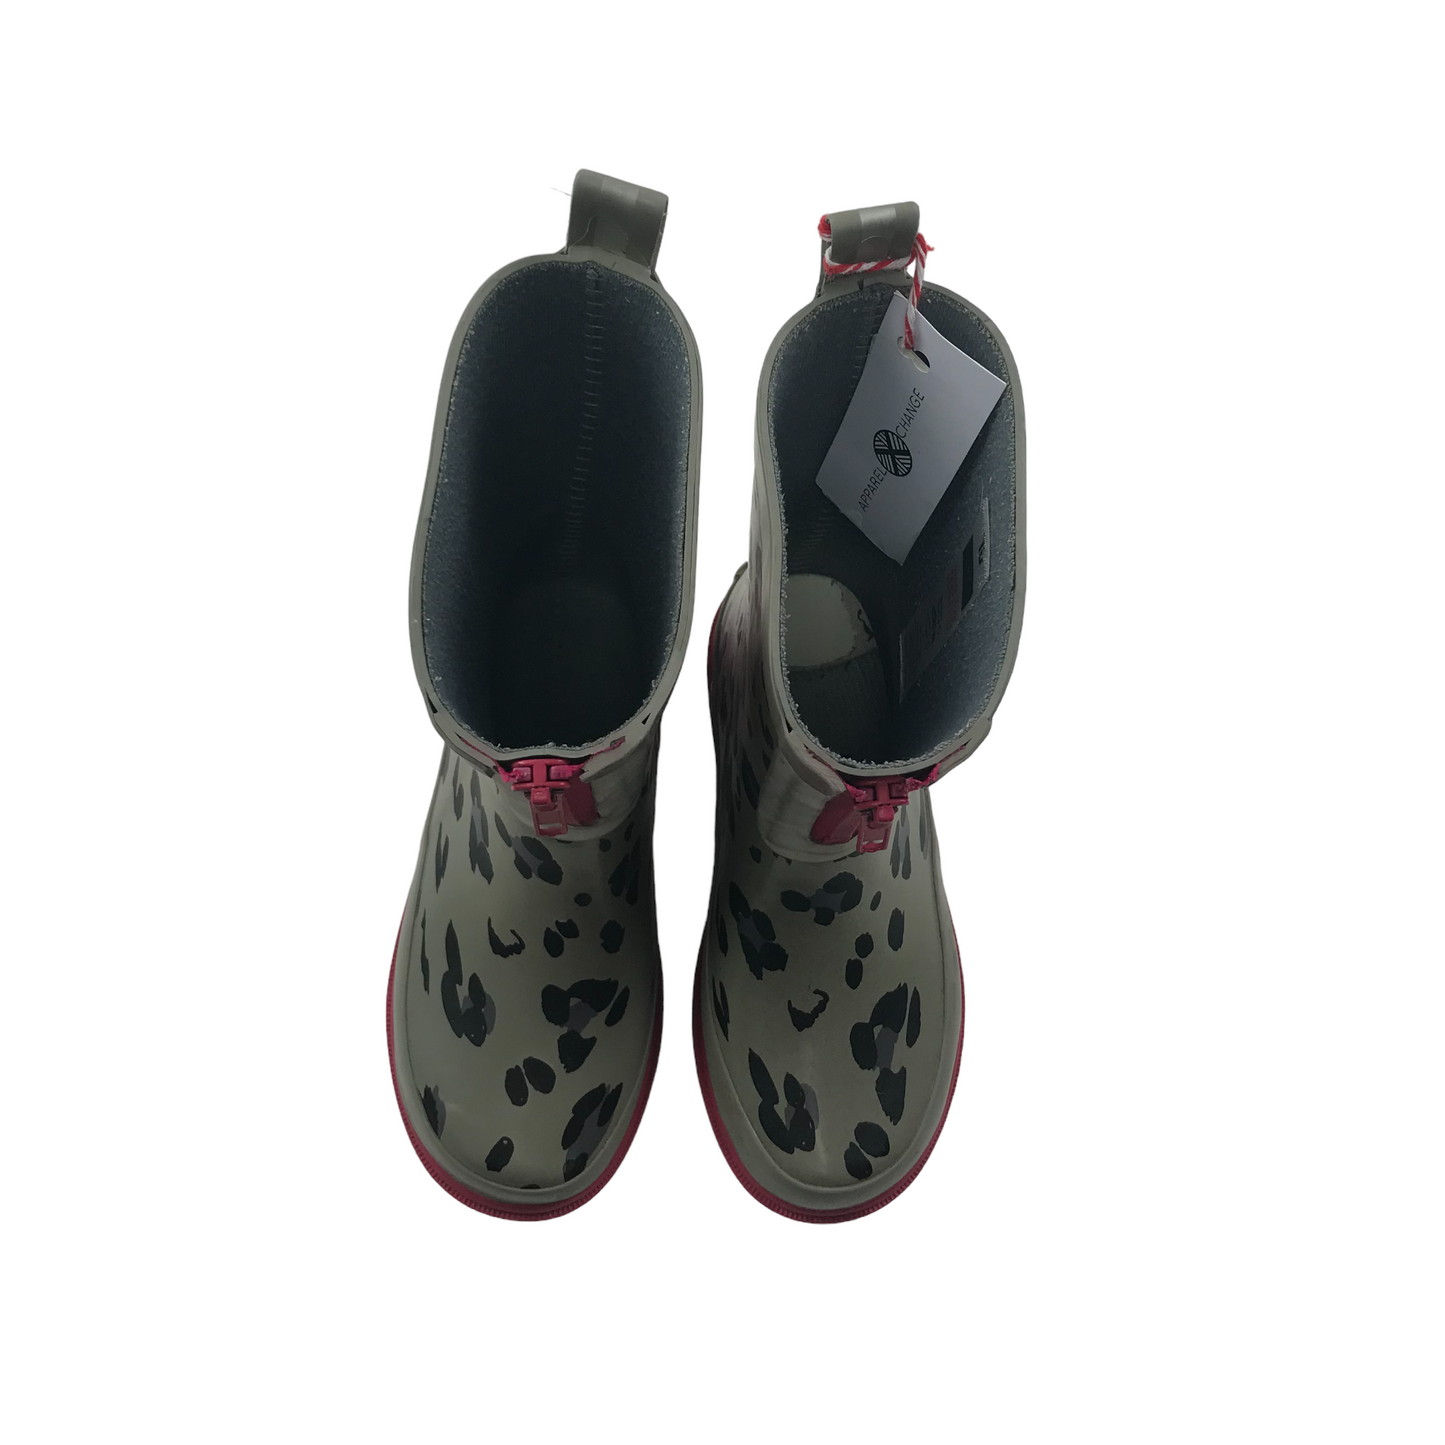 Tu Grey Leopard Print Wellies Shoe Size 10 junior